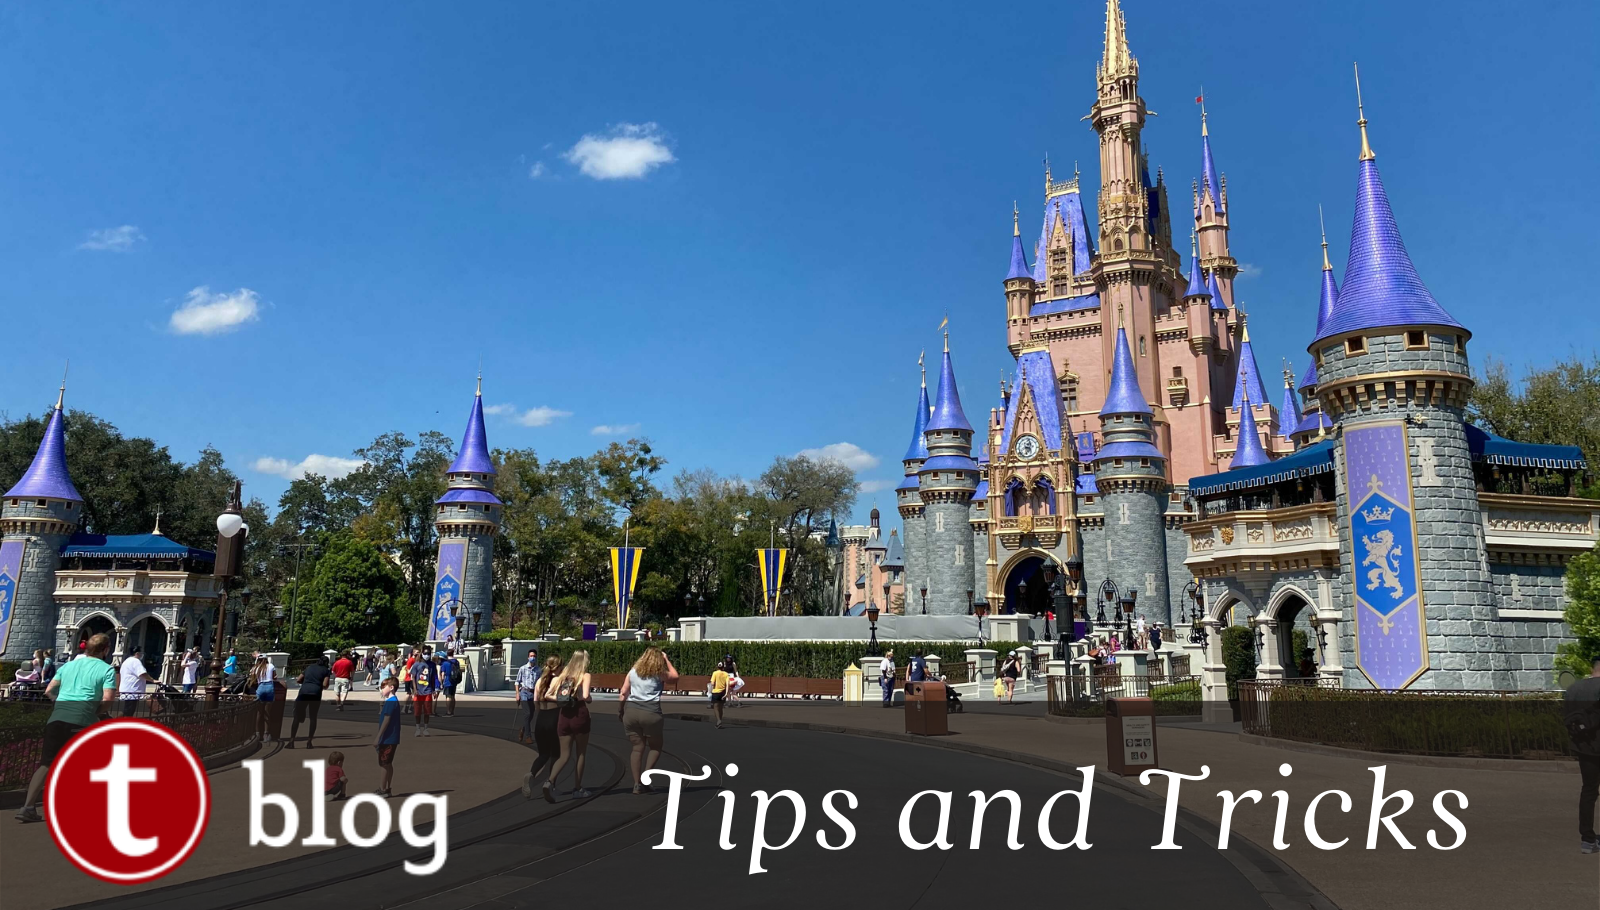 How to Make Disneyland Park Reservations - Disney Tourist Blog